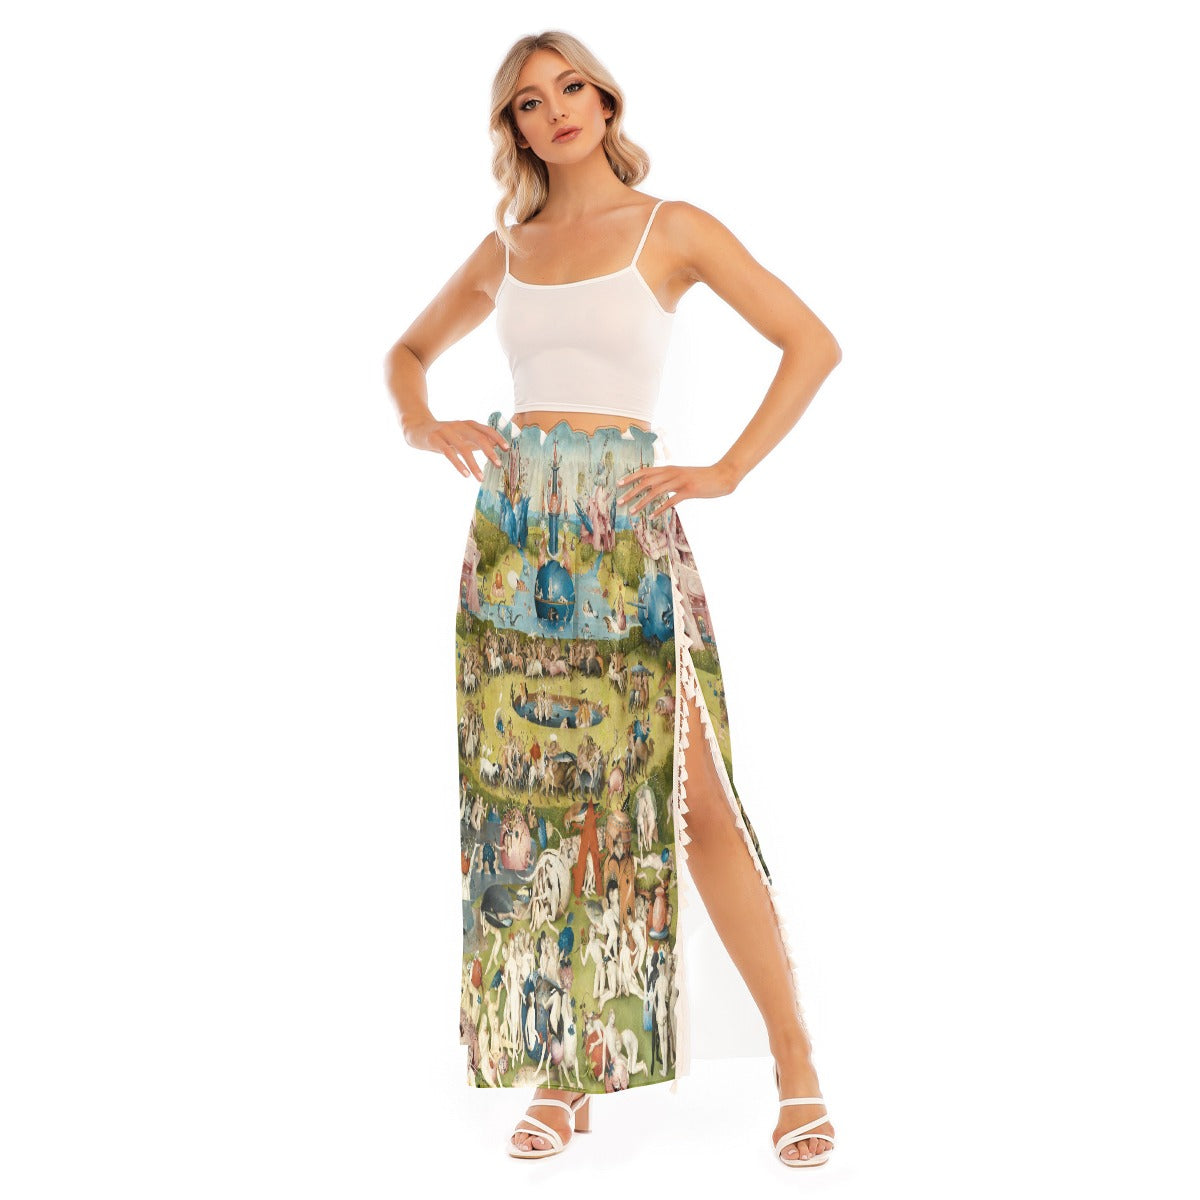 Art Fantasy Clothing - Enchanted Garden Skirt